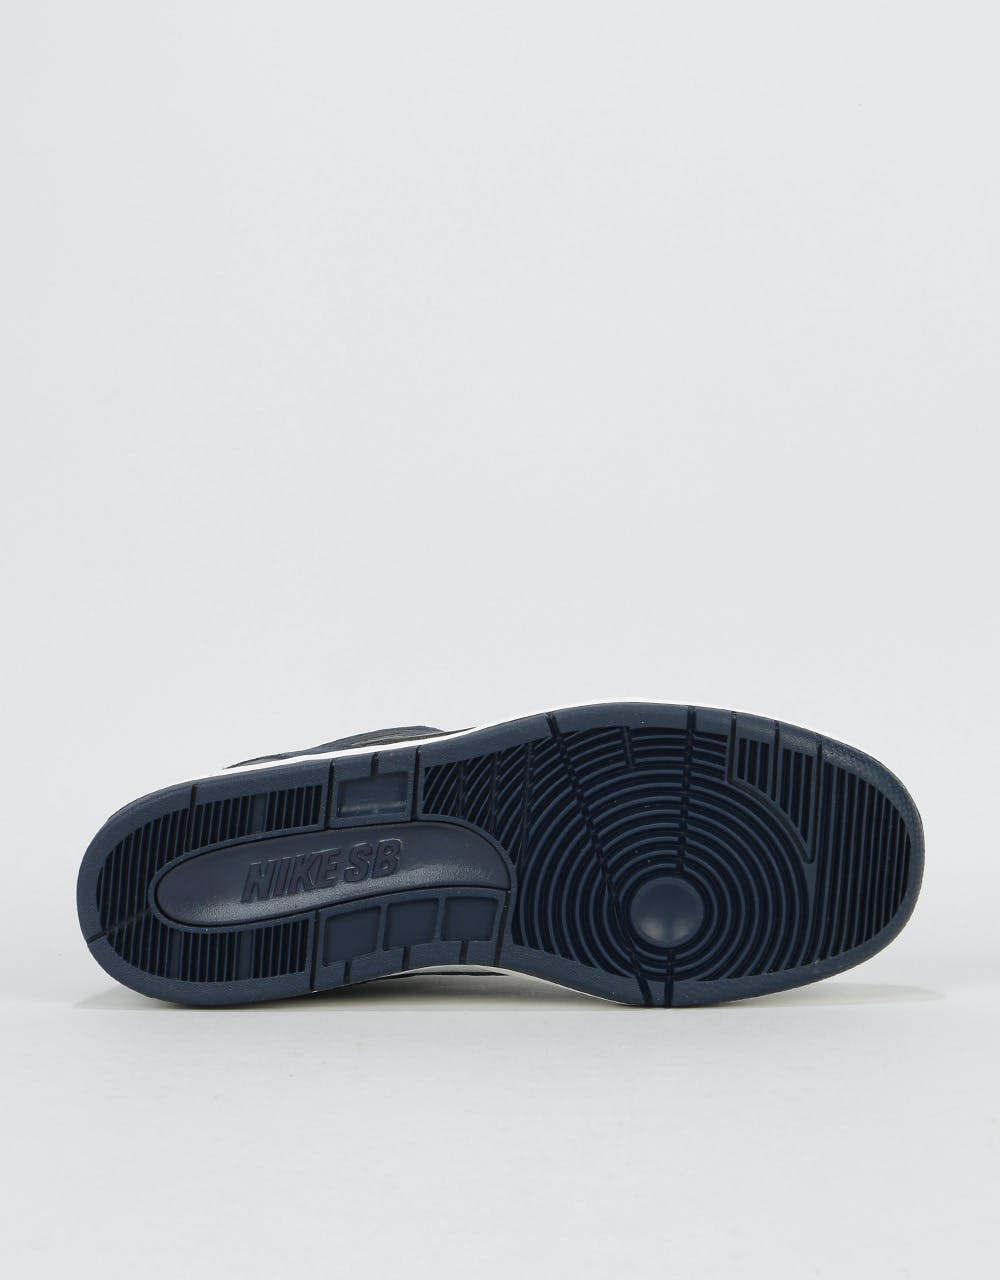 Nike SB Air Force II Low Skate Shoes - Obsidian/Black-White-Celestial